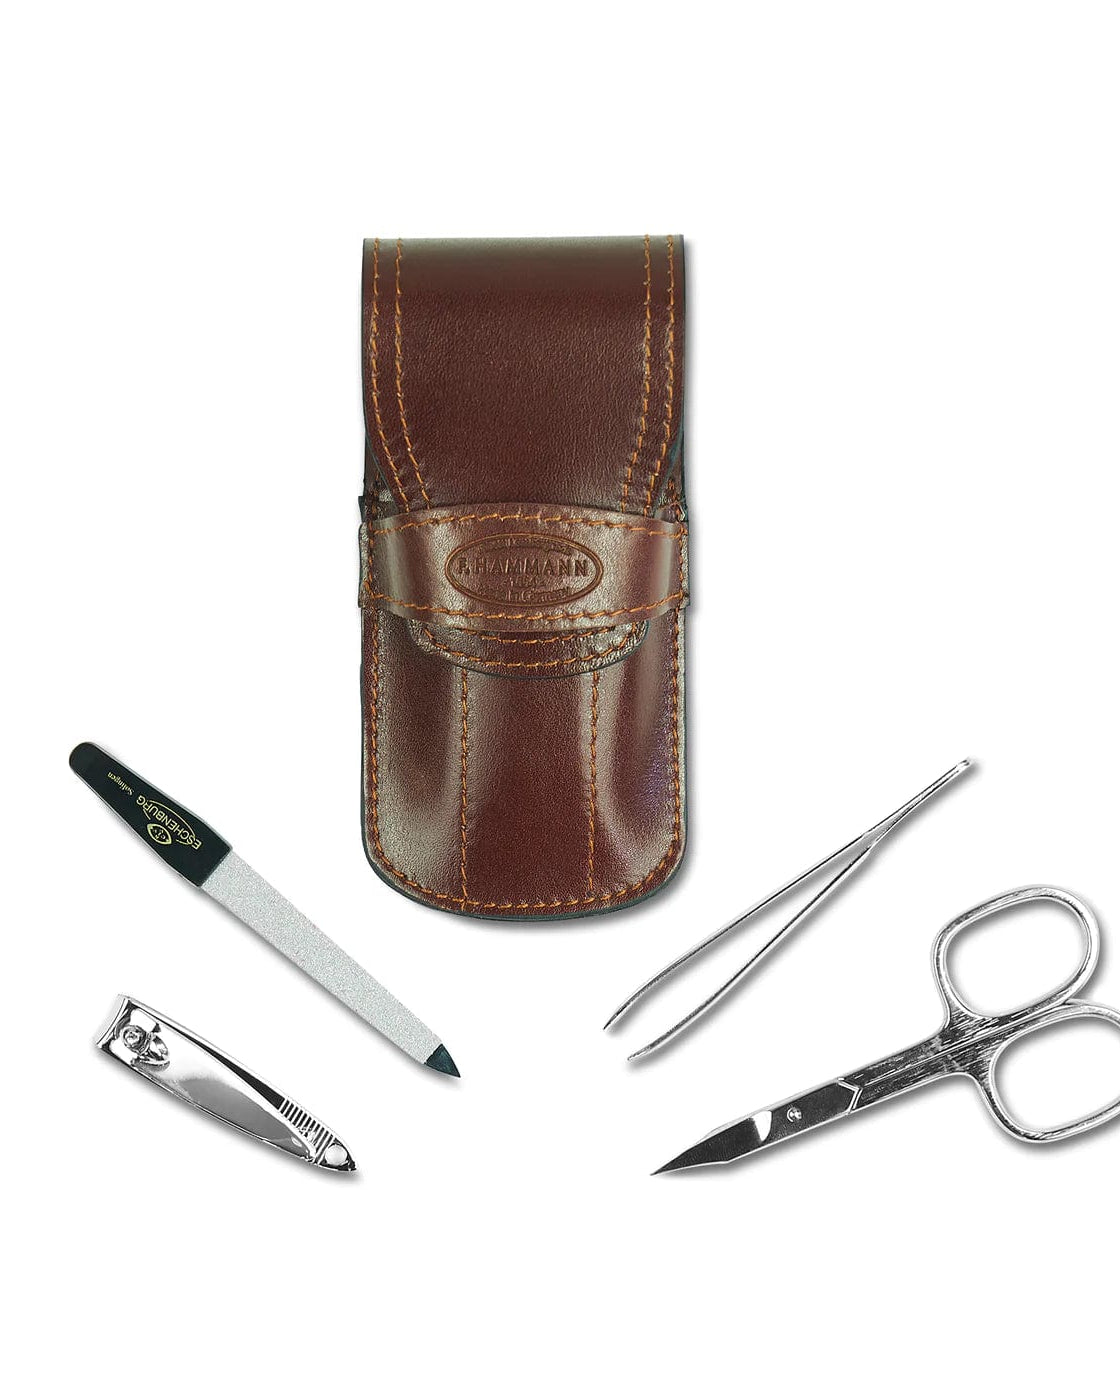 Caswell-Massey Men's Accessories F. Hammann 4-pc Manicure Set w/ Leather Case